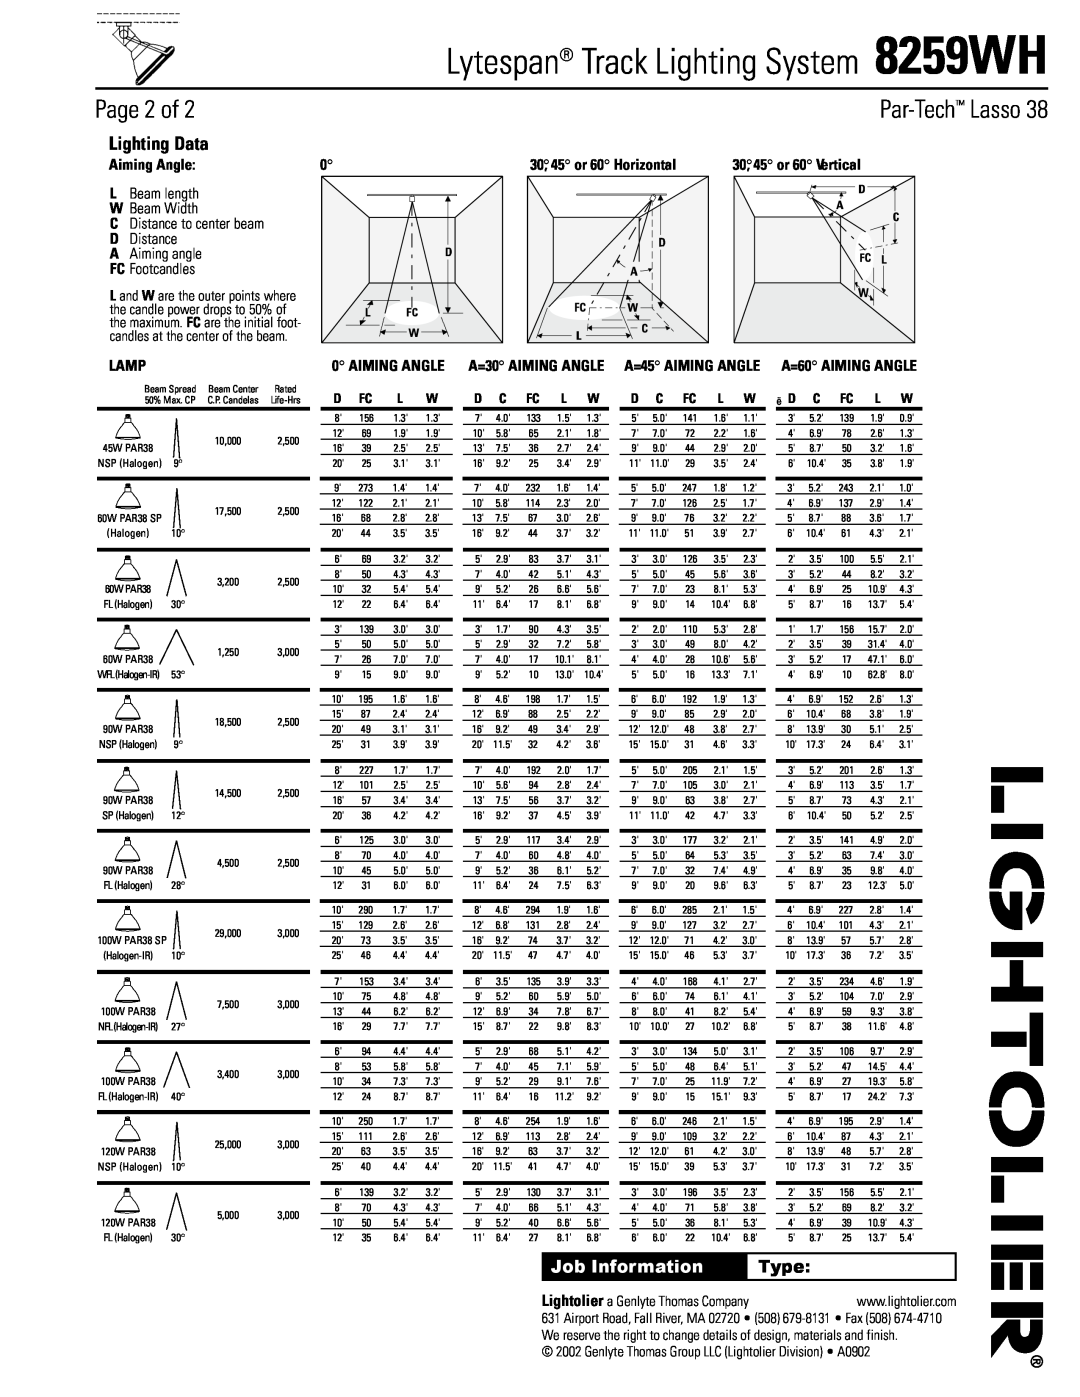 Lightolier 8259WH Page 2 of, Lamp, Lytespan Track Lighting System, Par-Tech Lasso, Lighting Data, Job Information, Type 